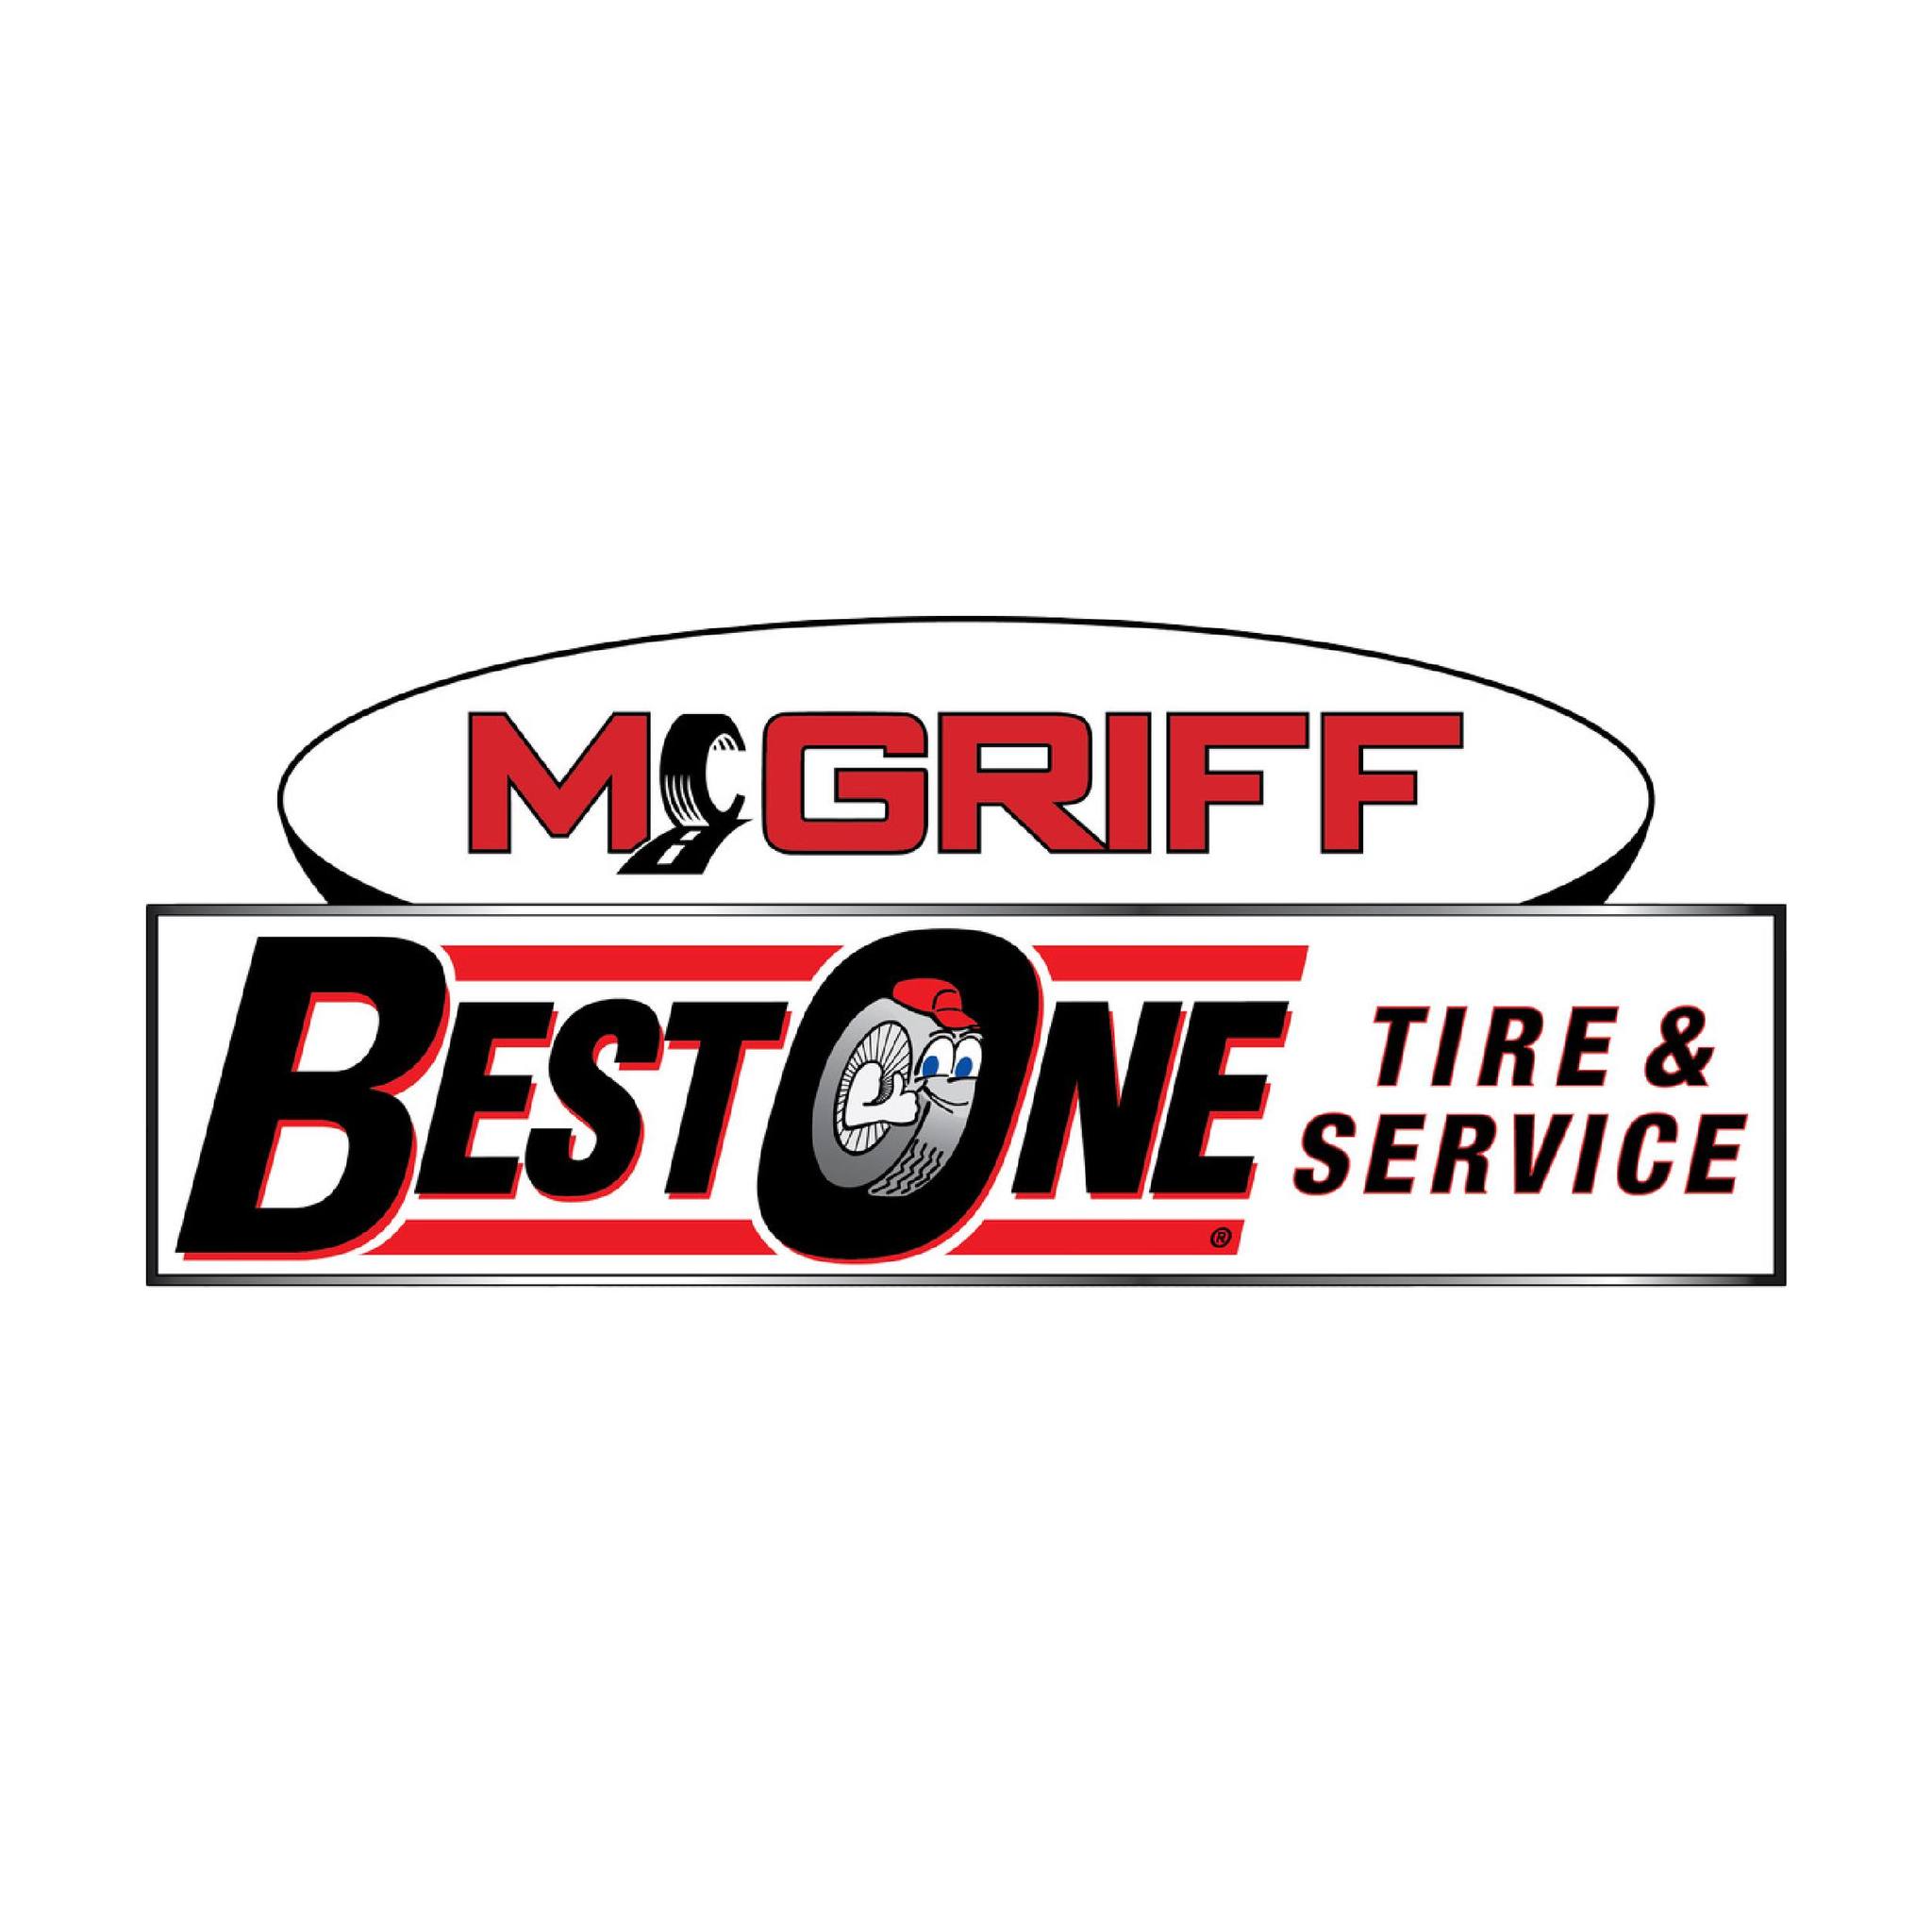 McGriff Tire & Service